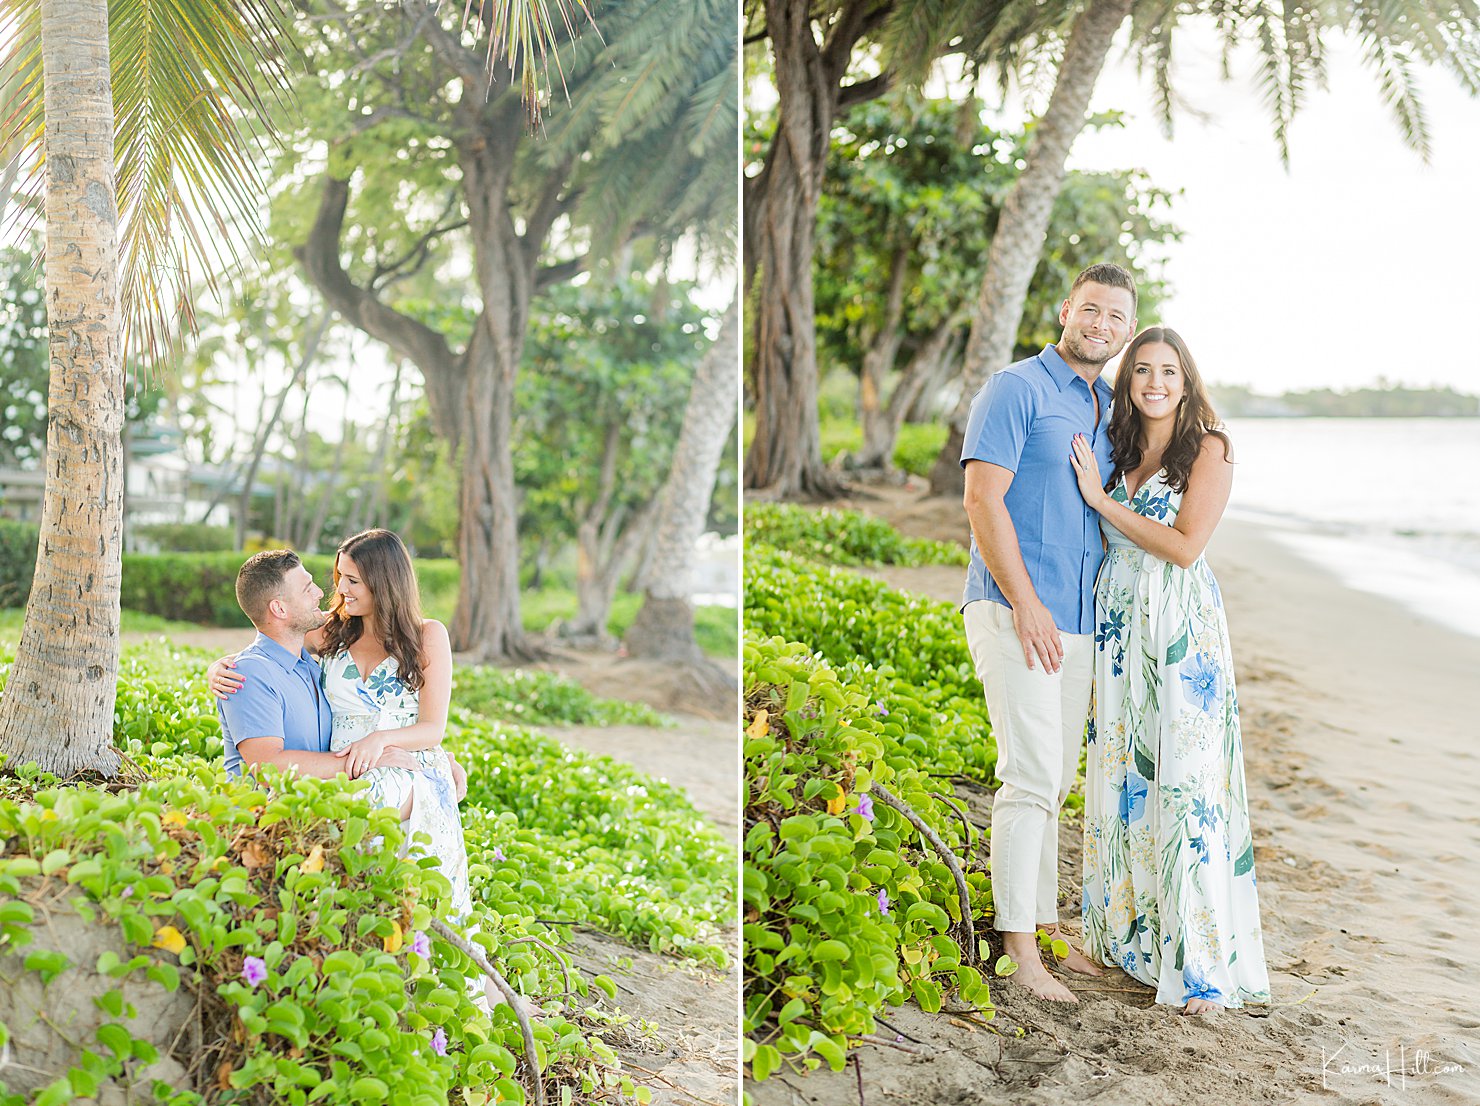 Maui couples photographer Karma Hill Photography